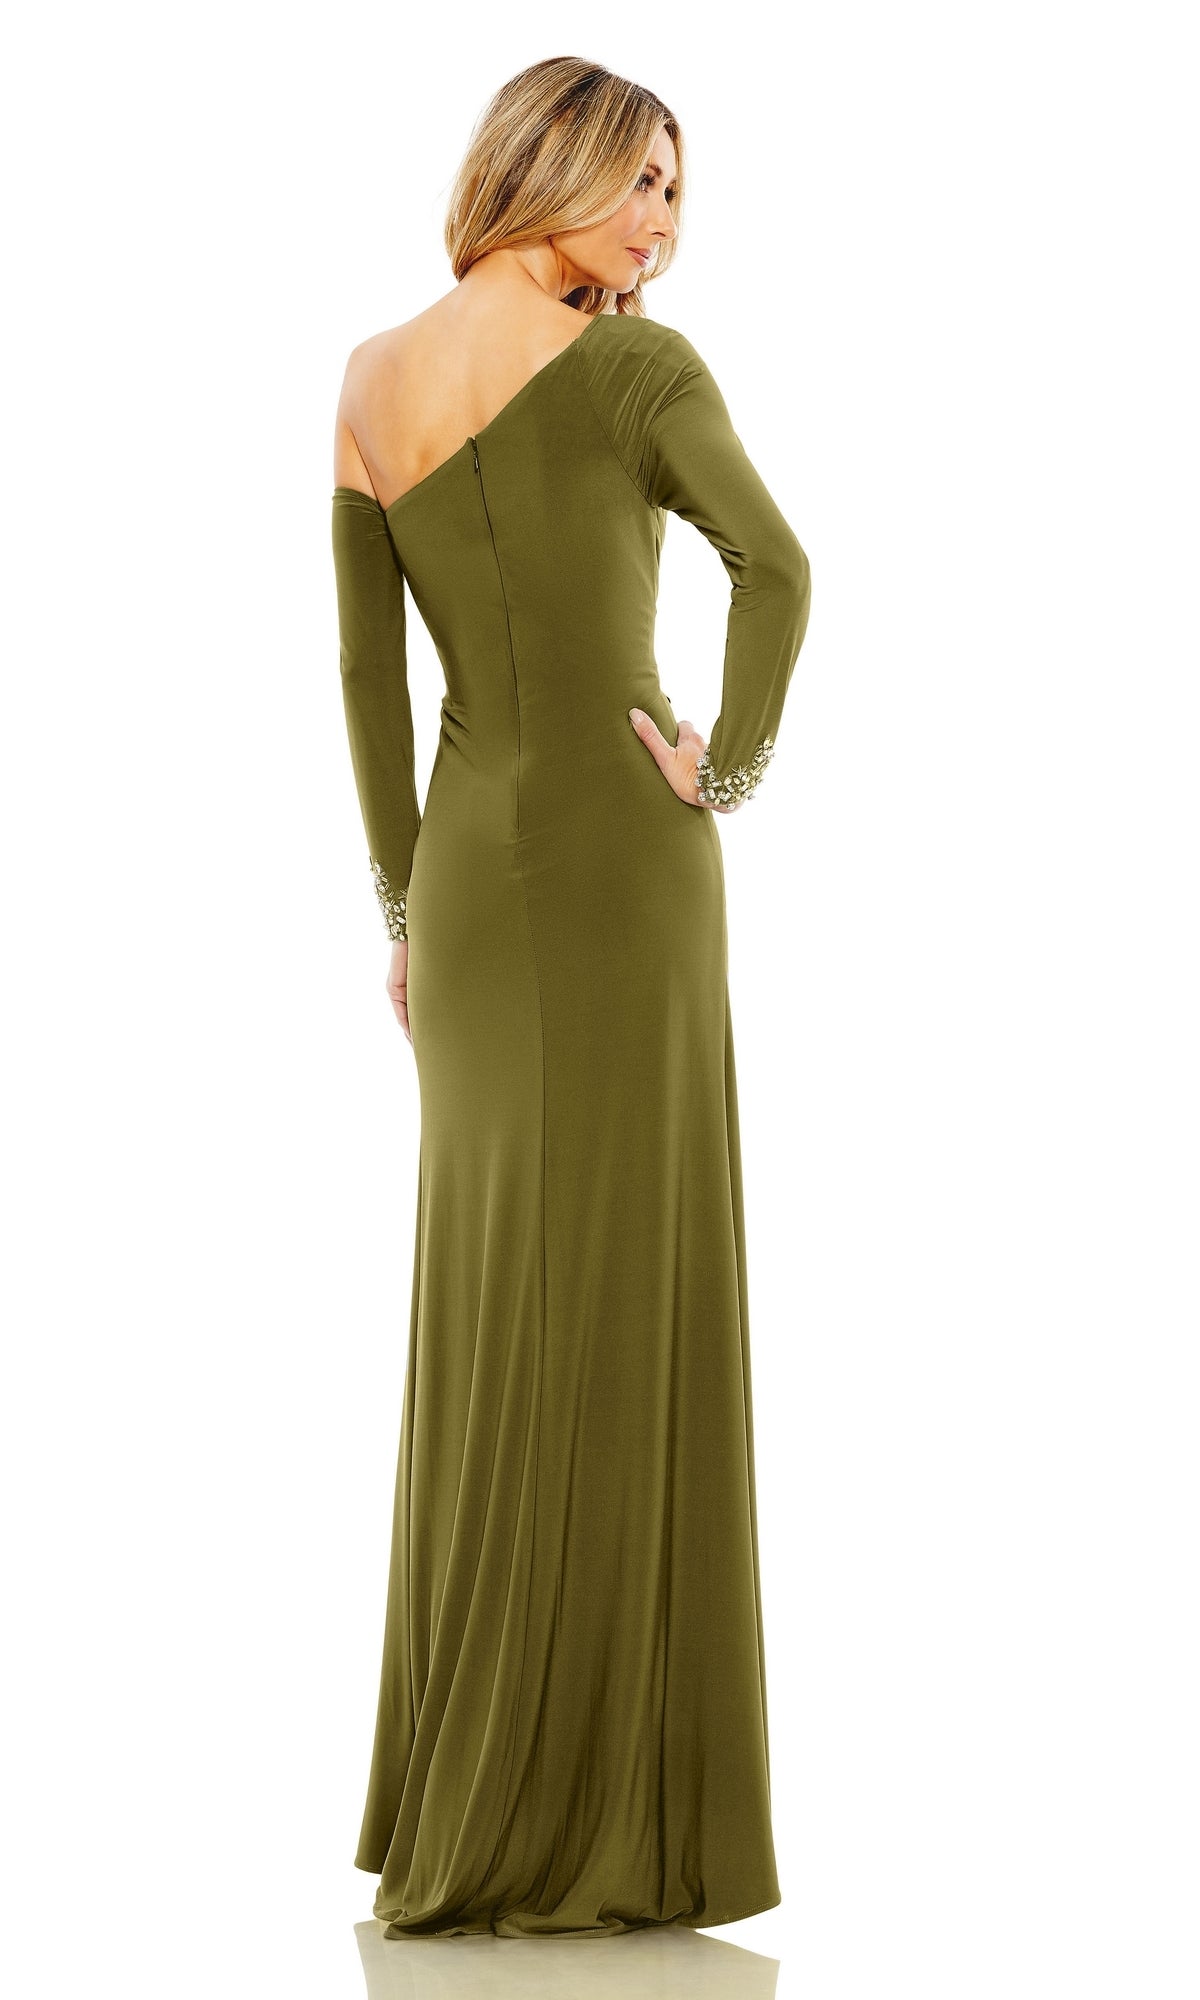 Long Formal Dress 12489 by Mac Duggal